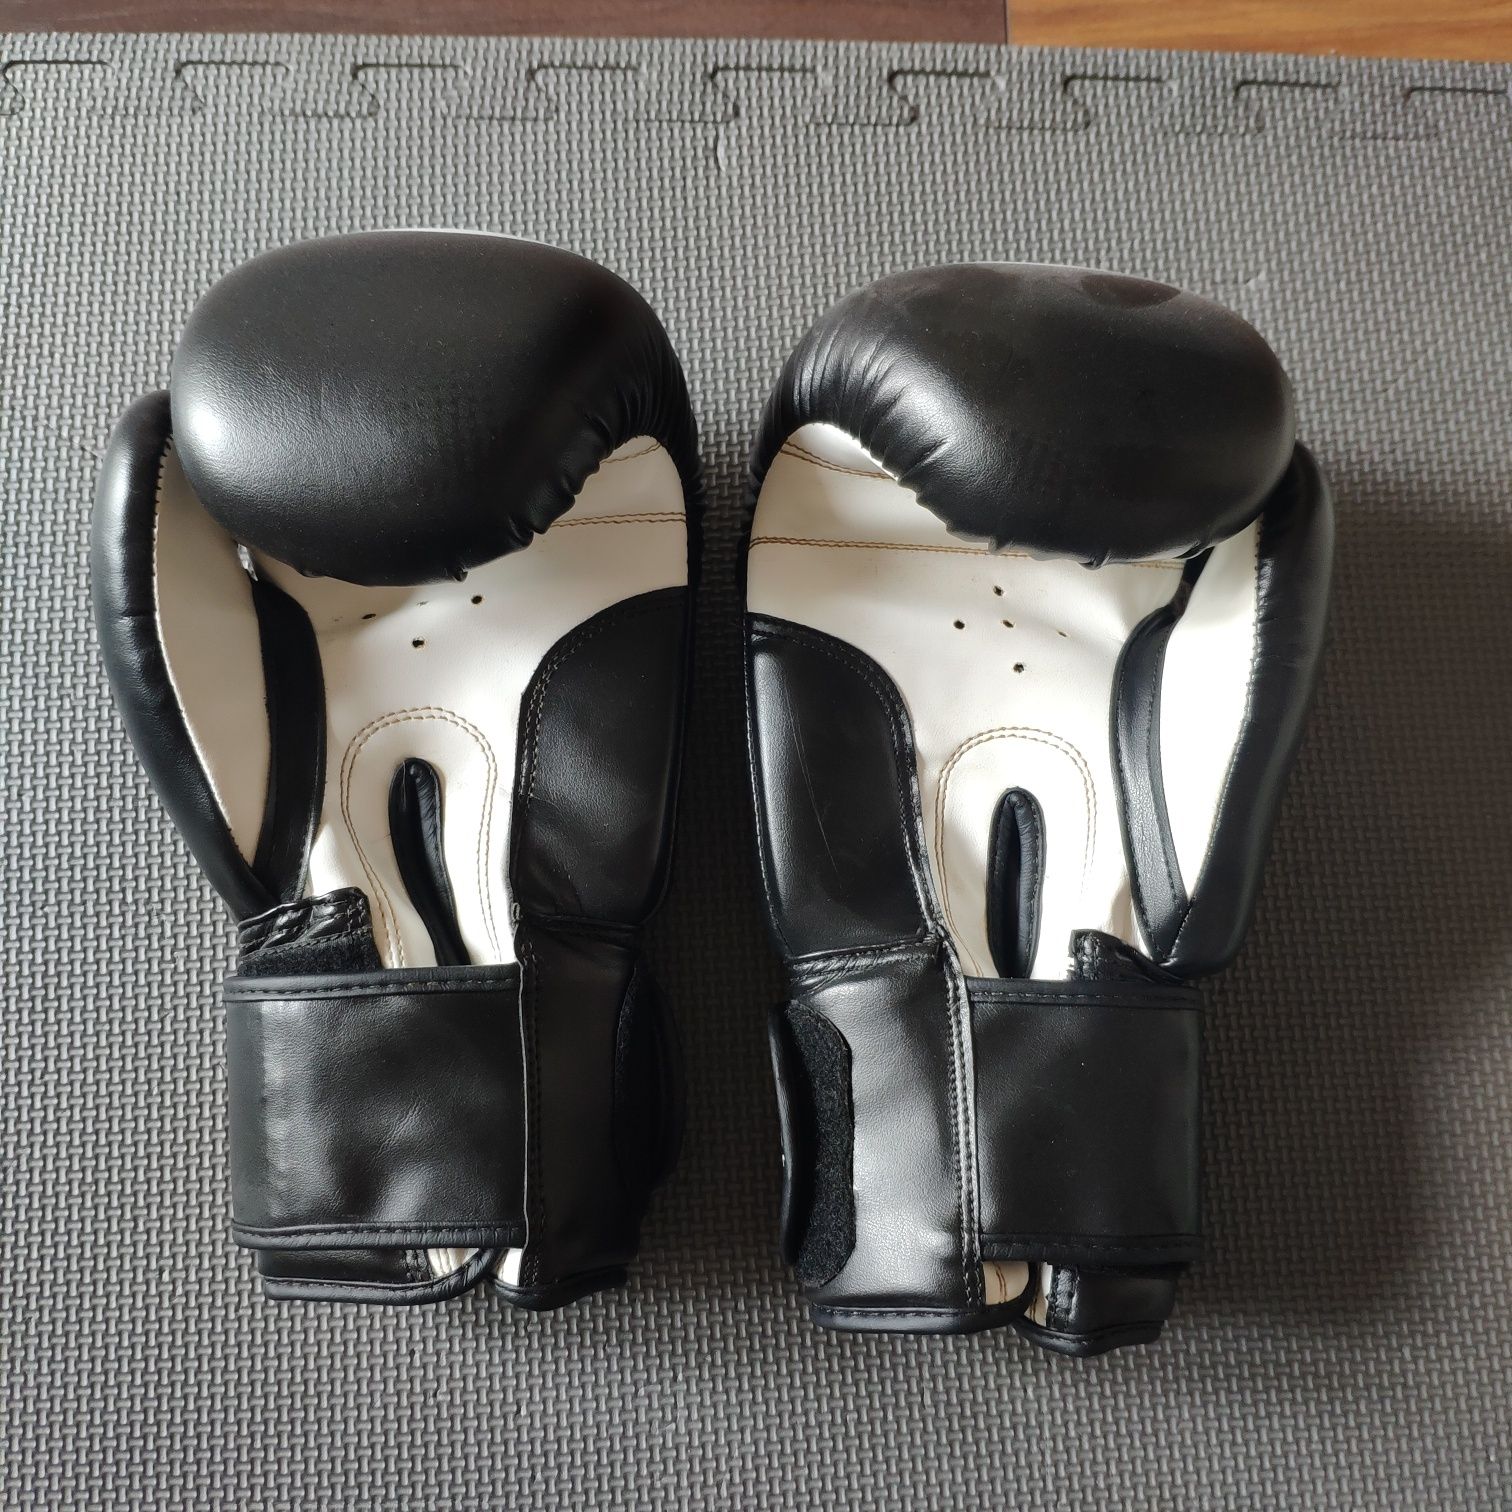 Zestaw bokserski RING (worek + rękawice)